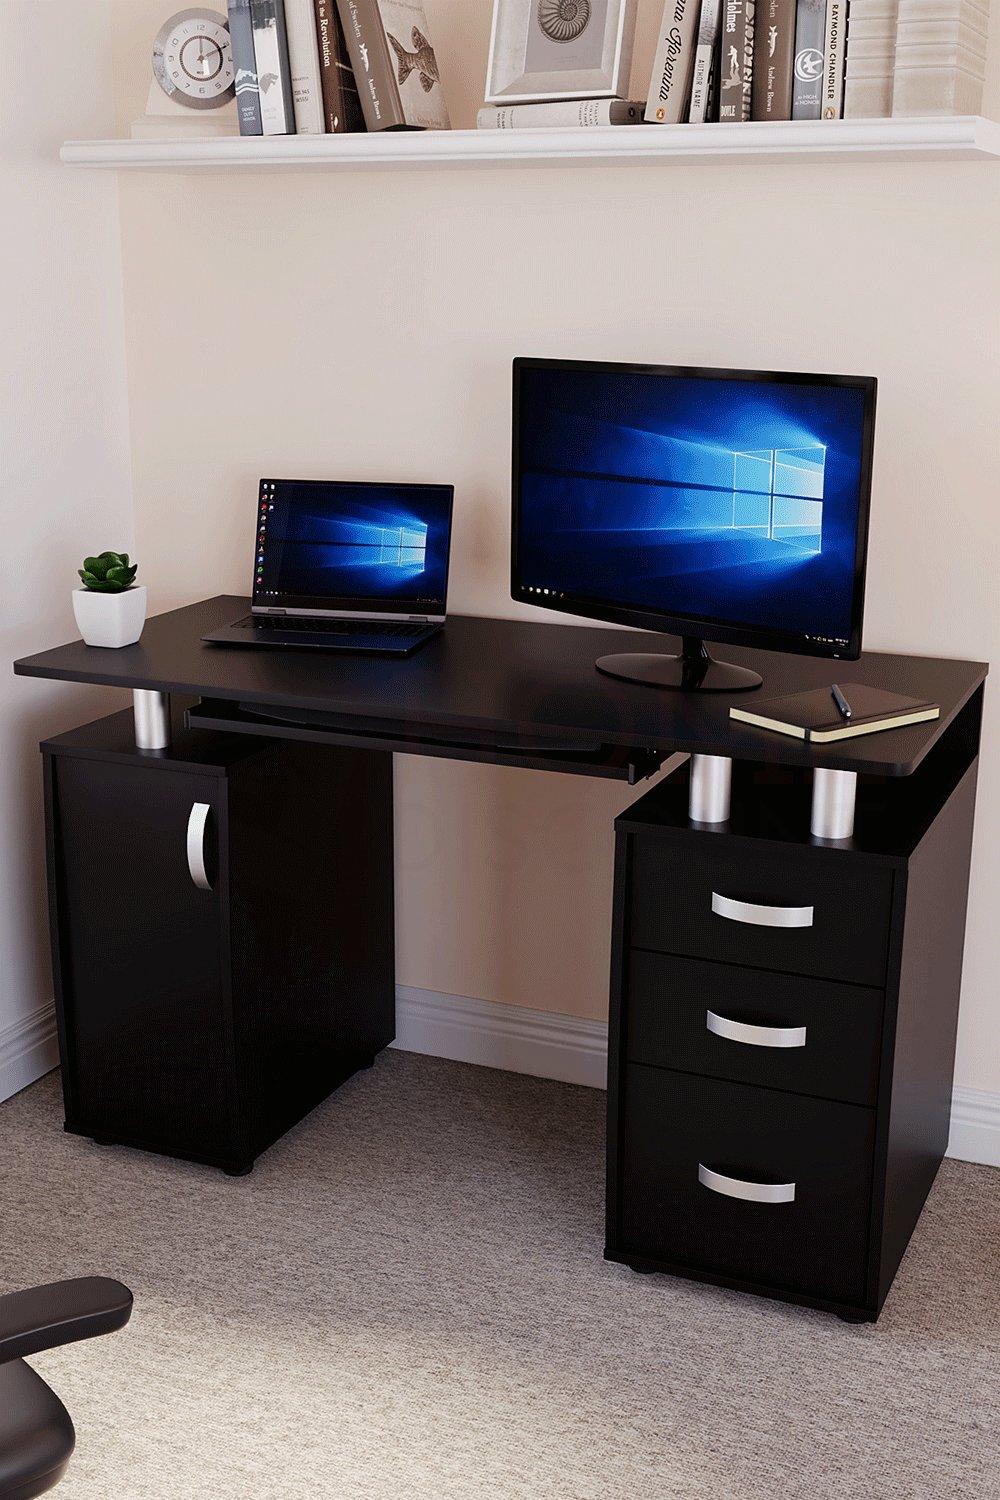 Vida Designs Otley 3 Drawer Computer Desk Storage Office Study Gaming Table